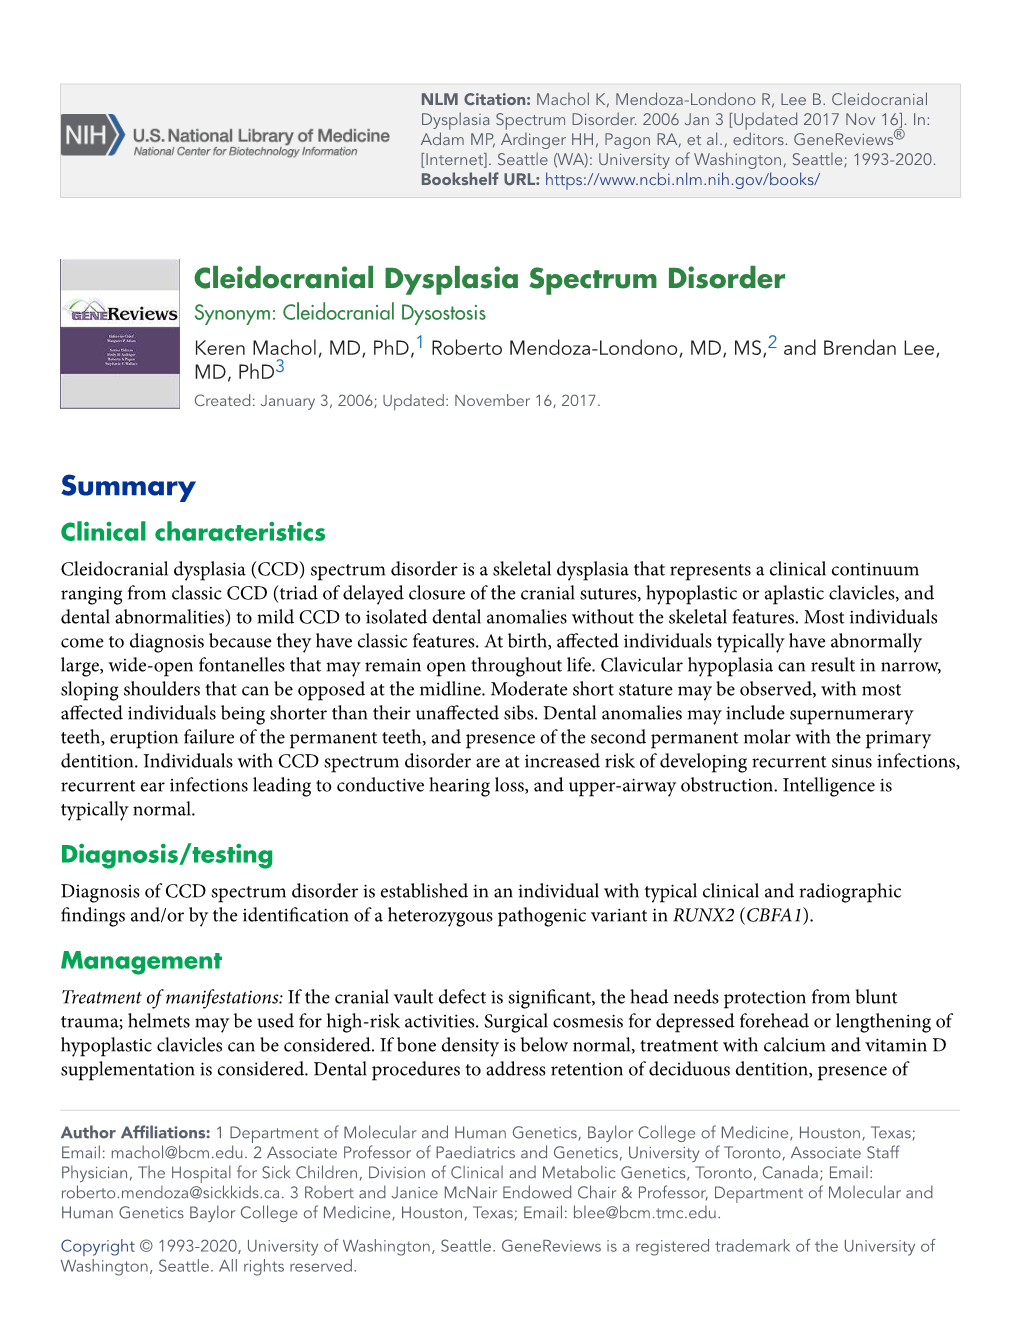 Cleidocranial Dysplasia Spectrum Disorder